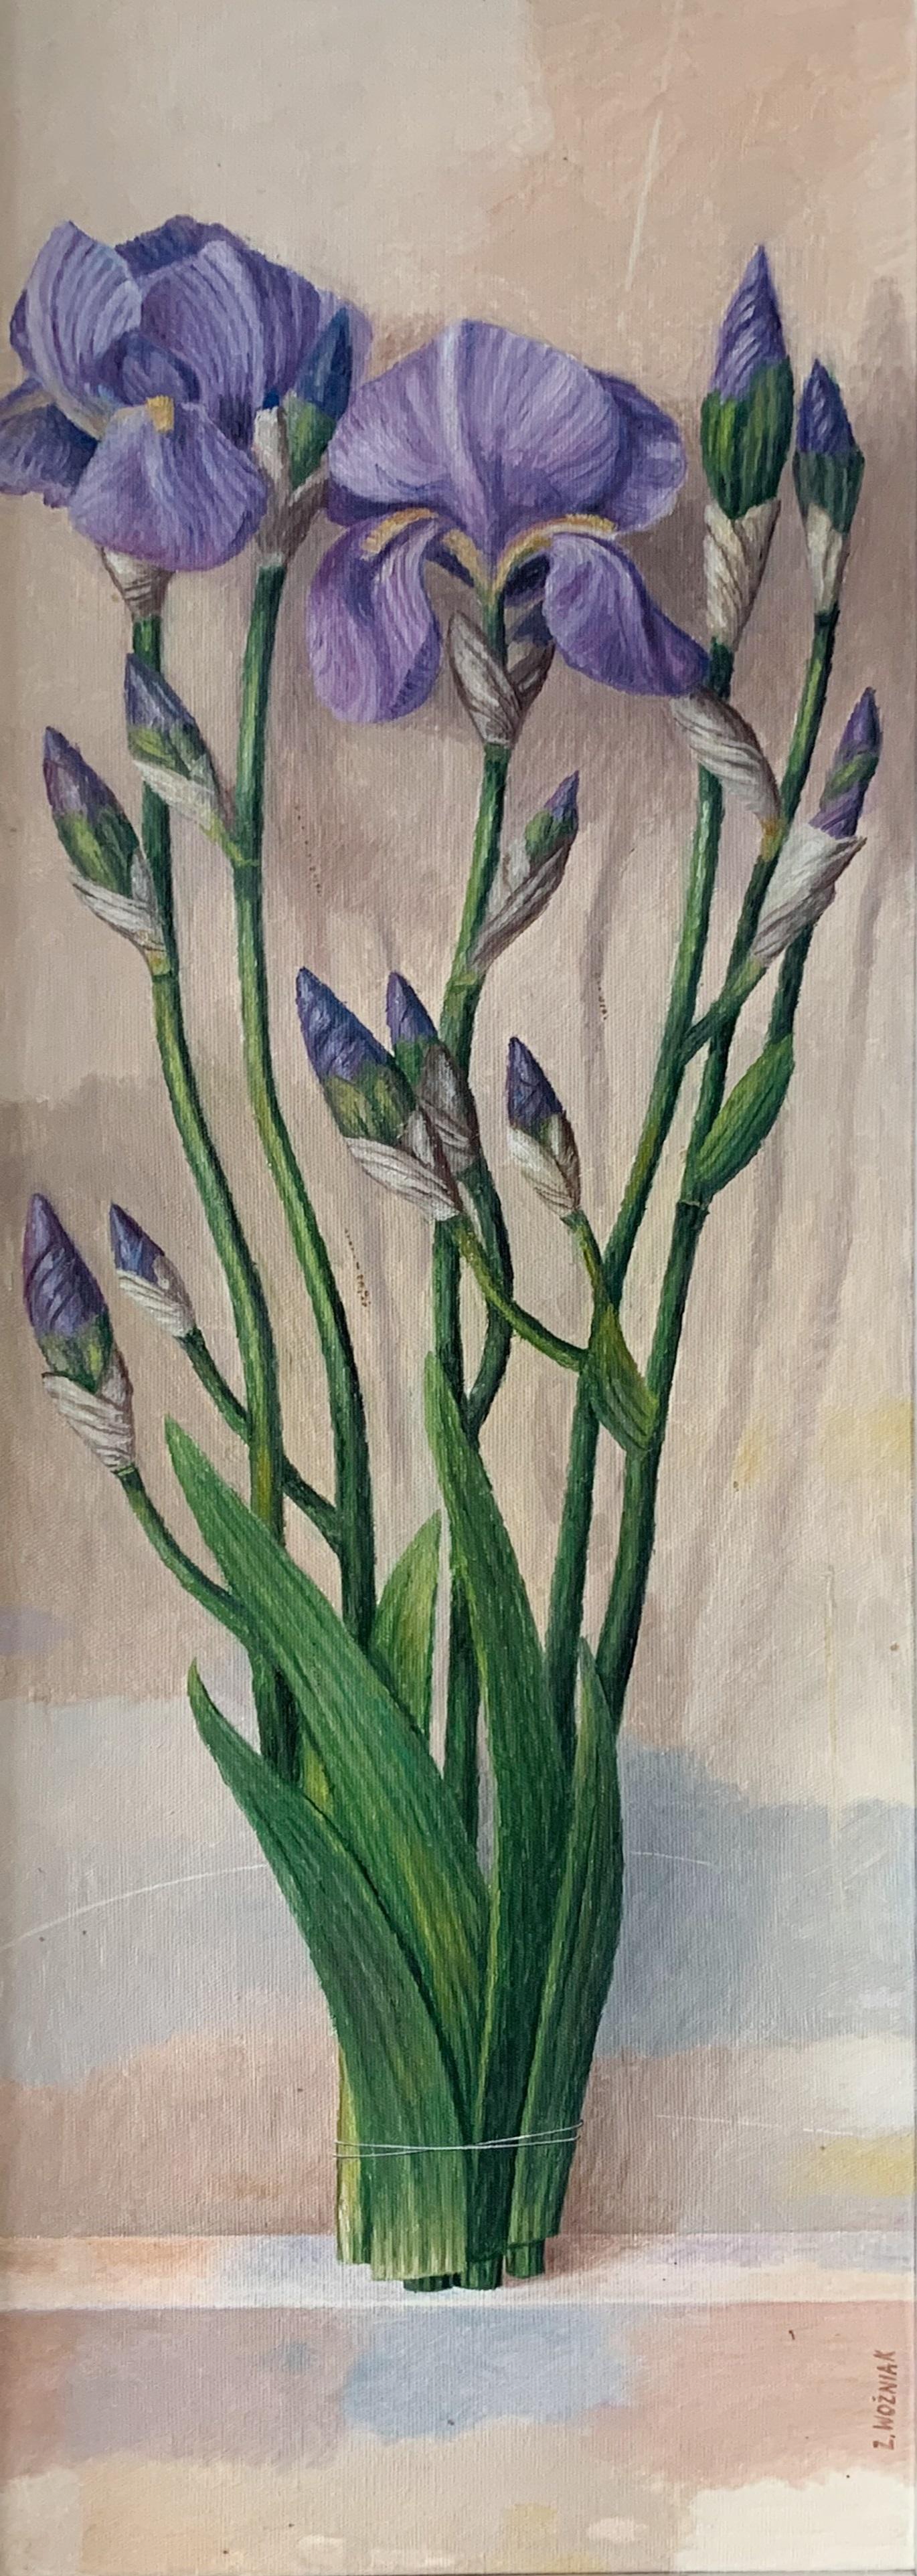 Zbigniew Wozniak Figurative Painting - Irises - Figurative Oil Painting Realism, Floral Still life, Flowers, Polish art